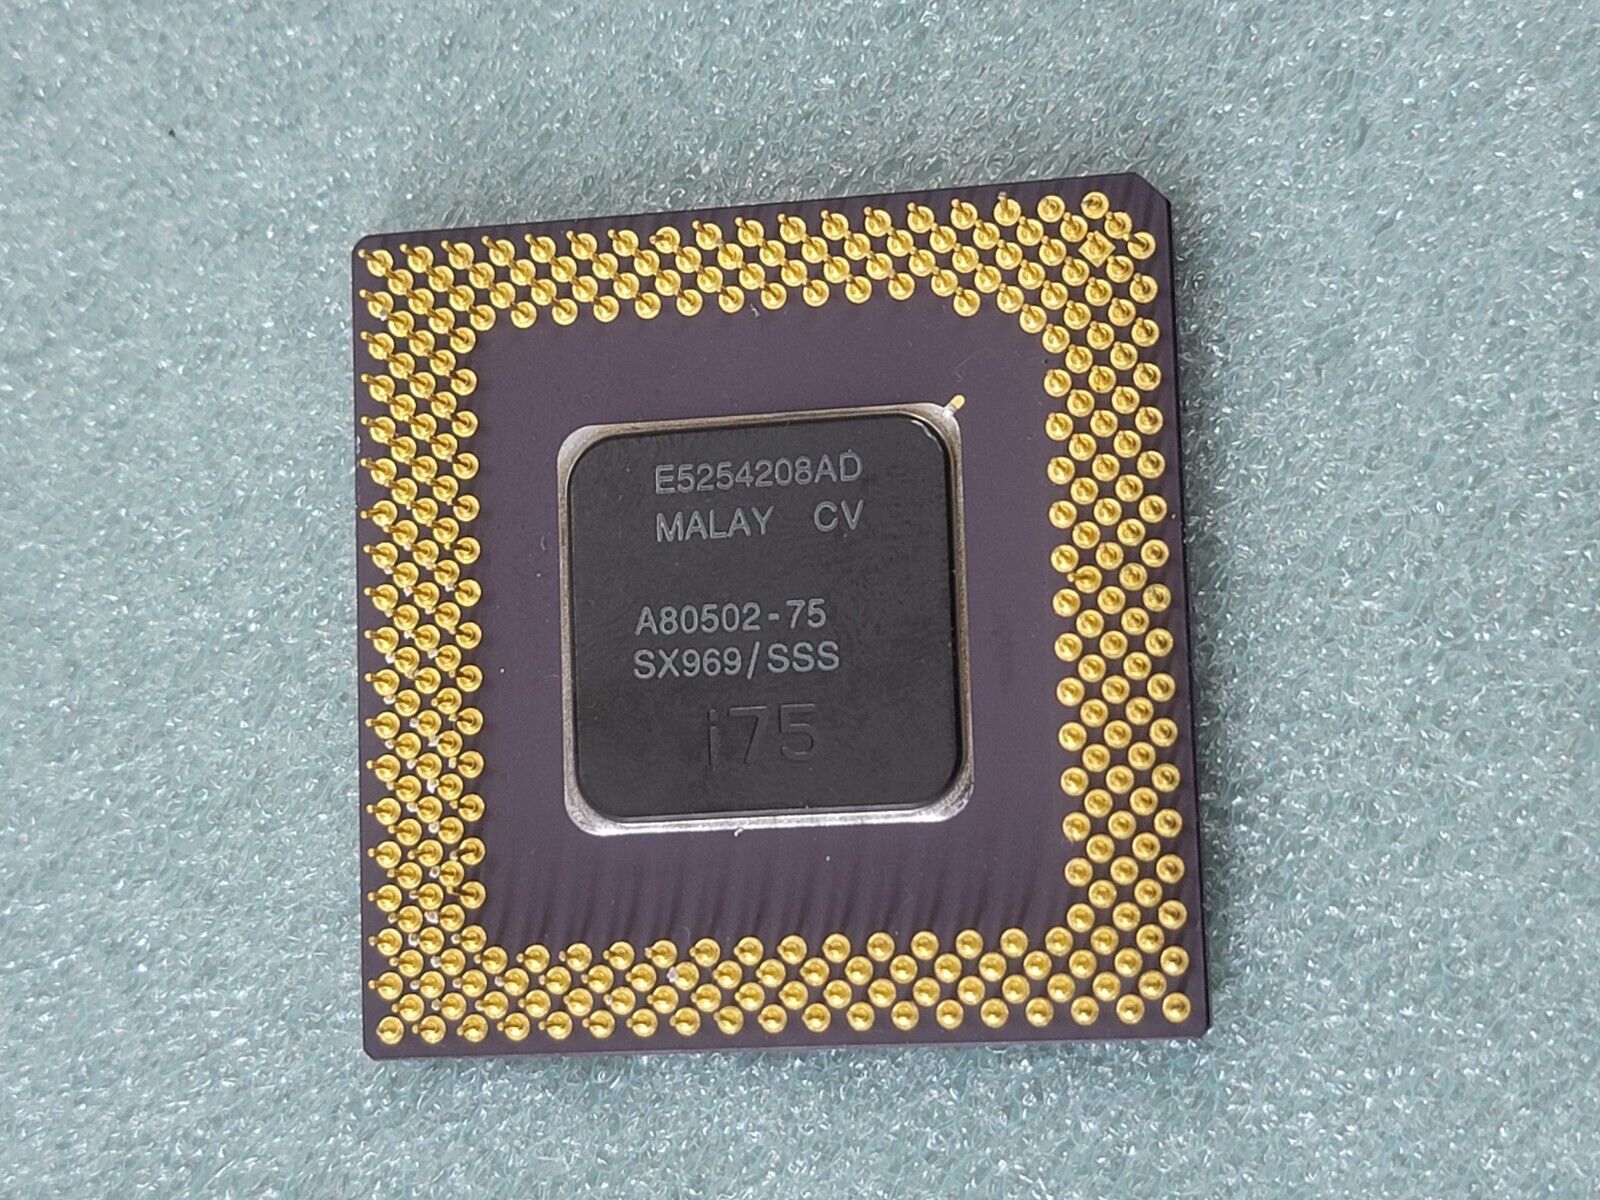 INTEL PENTIUM 75 Mhz SX969 PROCESSOR CPU SOCKET 7 Vintage A80502-75 P75 Gold